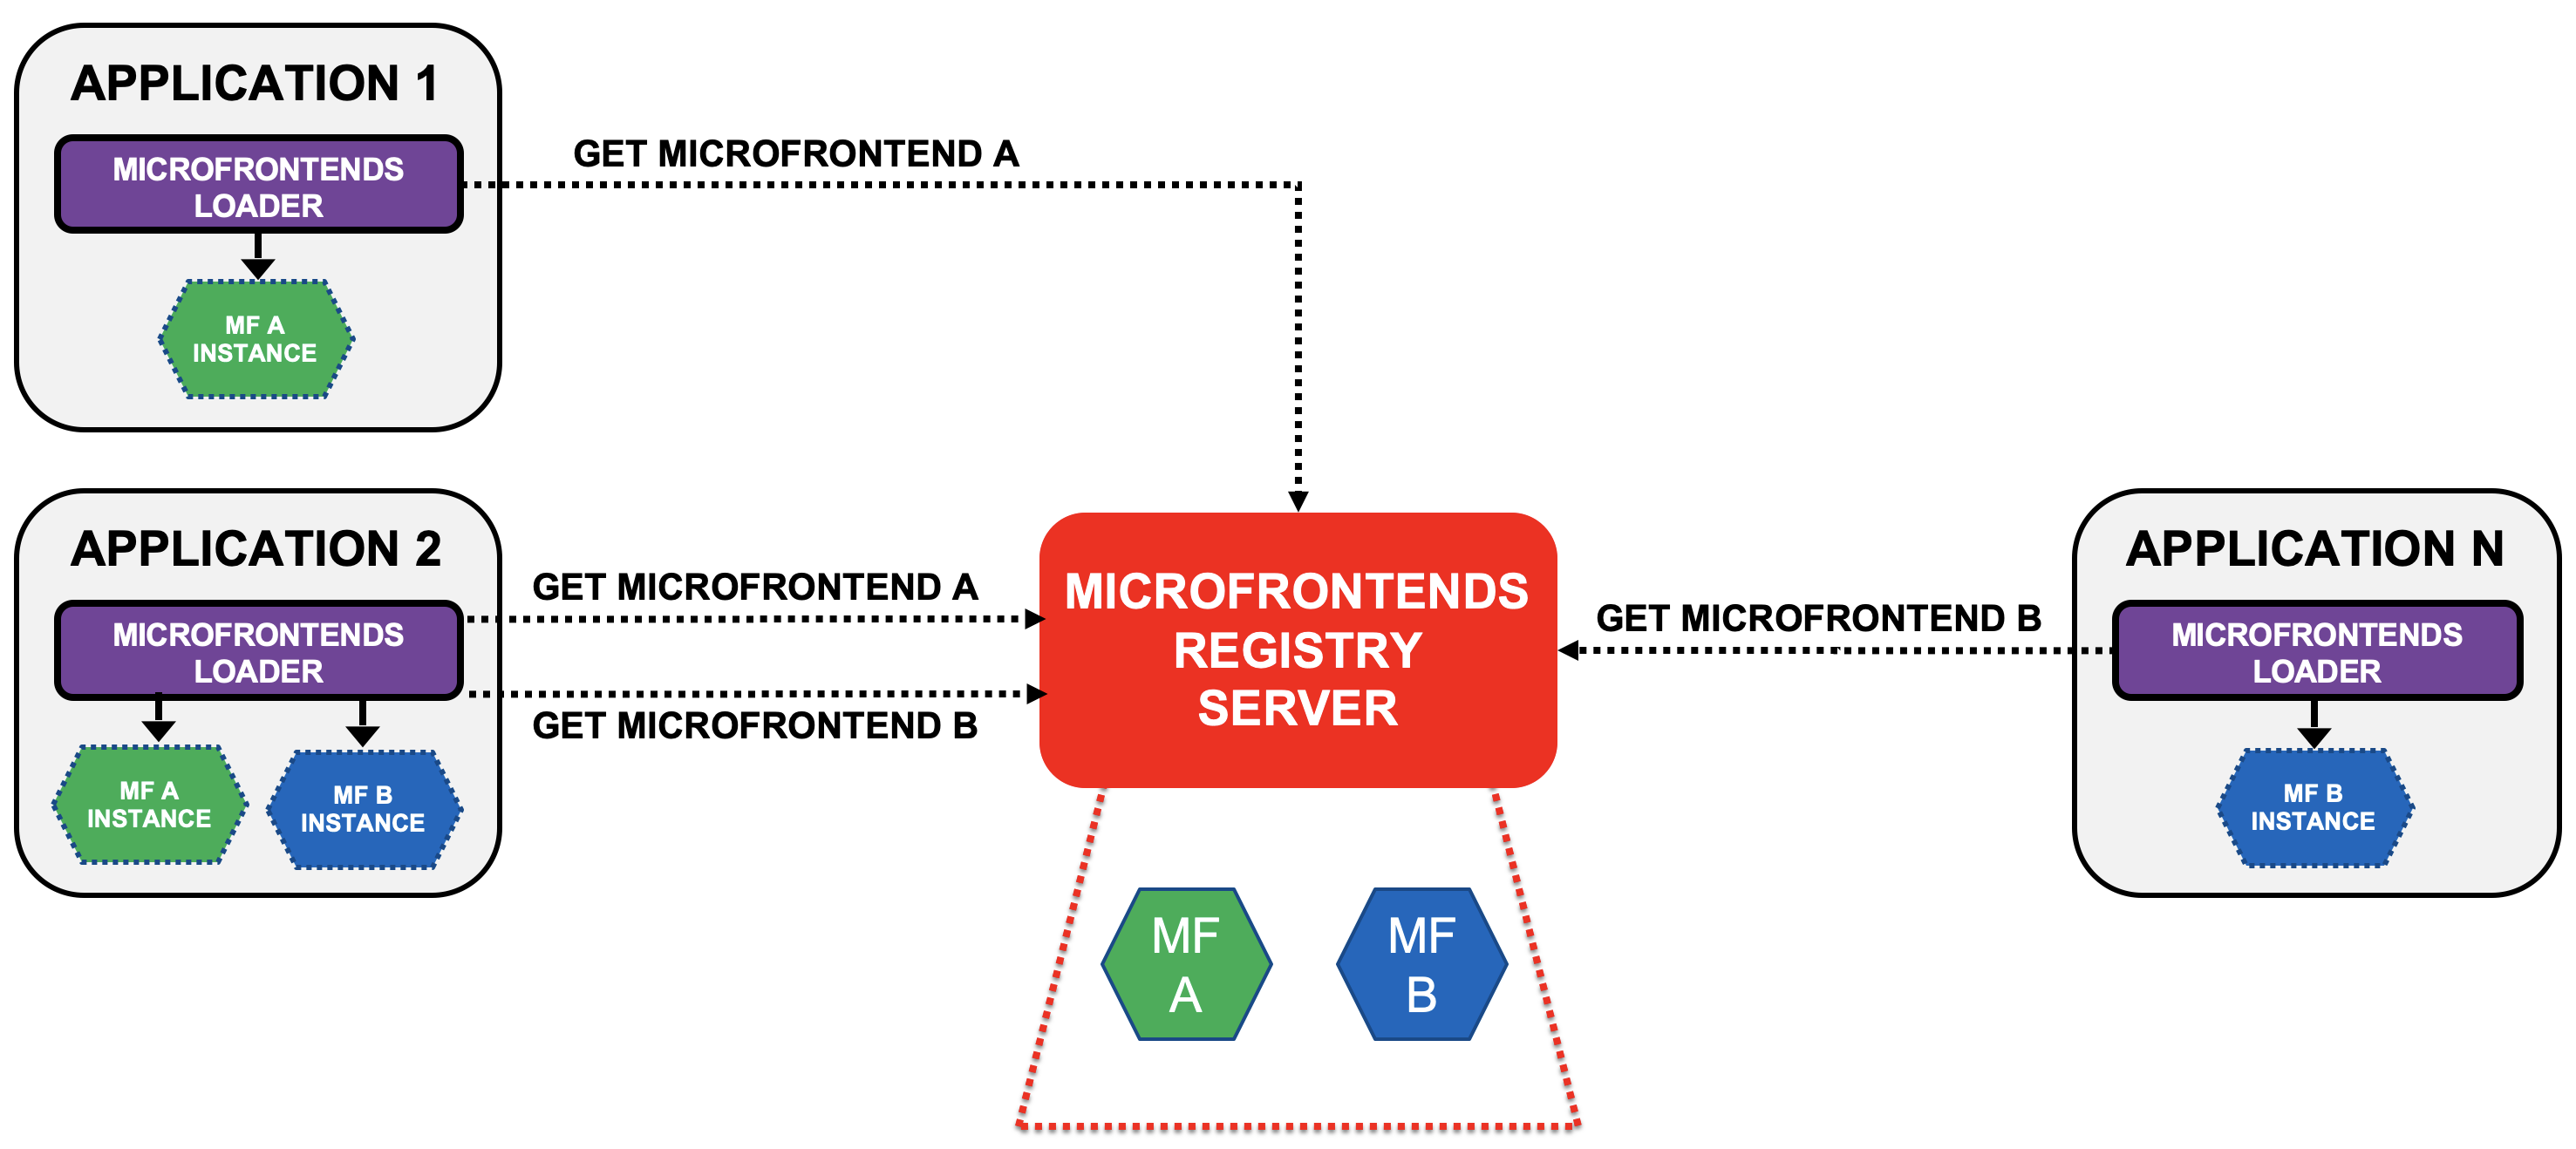 microfrontends loader